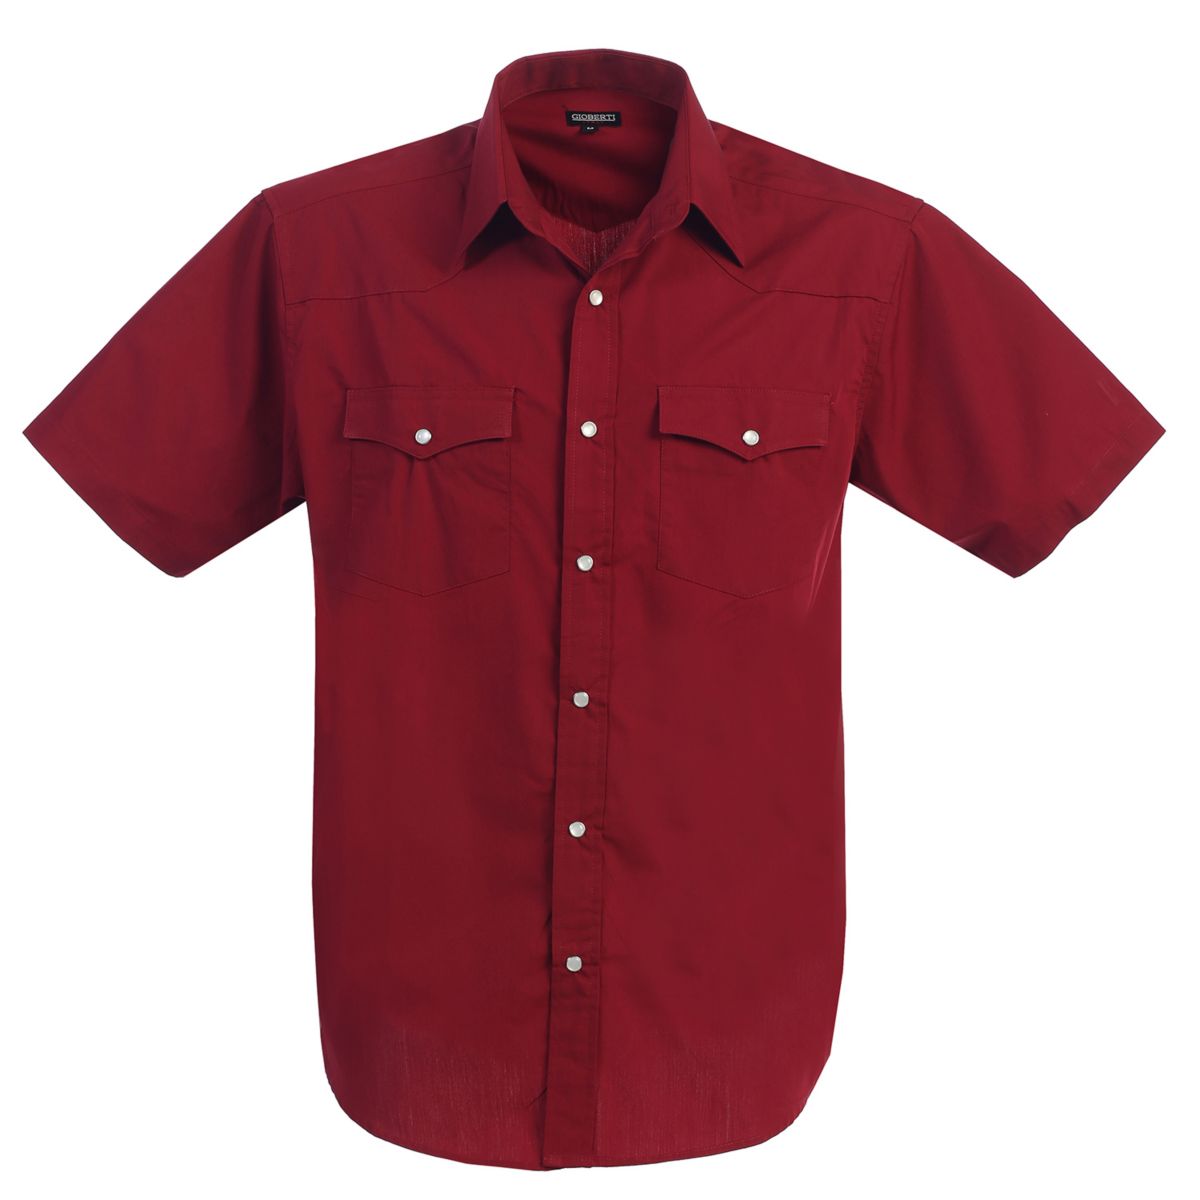 Gioberti Mens Casual Western Solid Short Sleeve Shirt With Pearl Snaps Gioberti